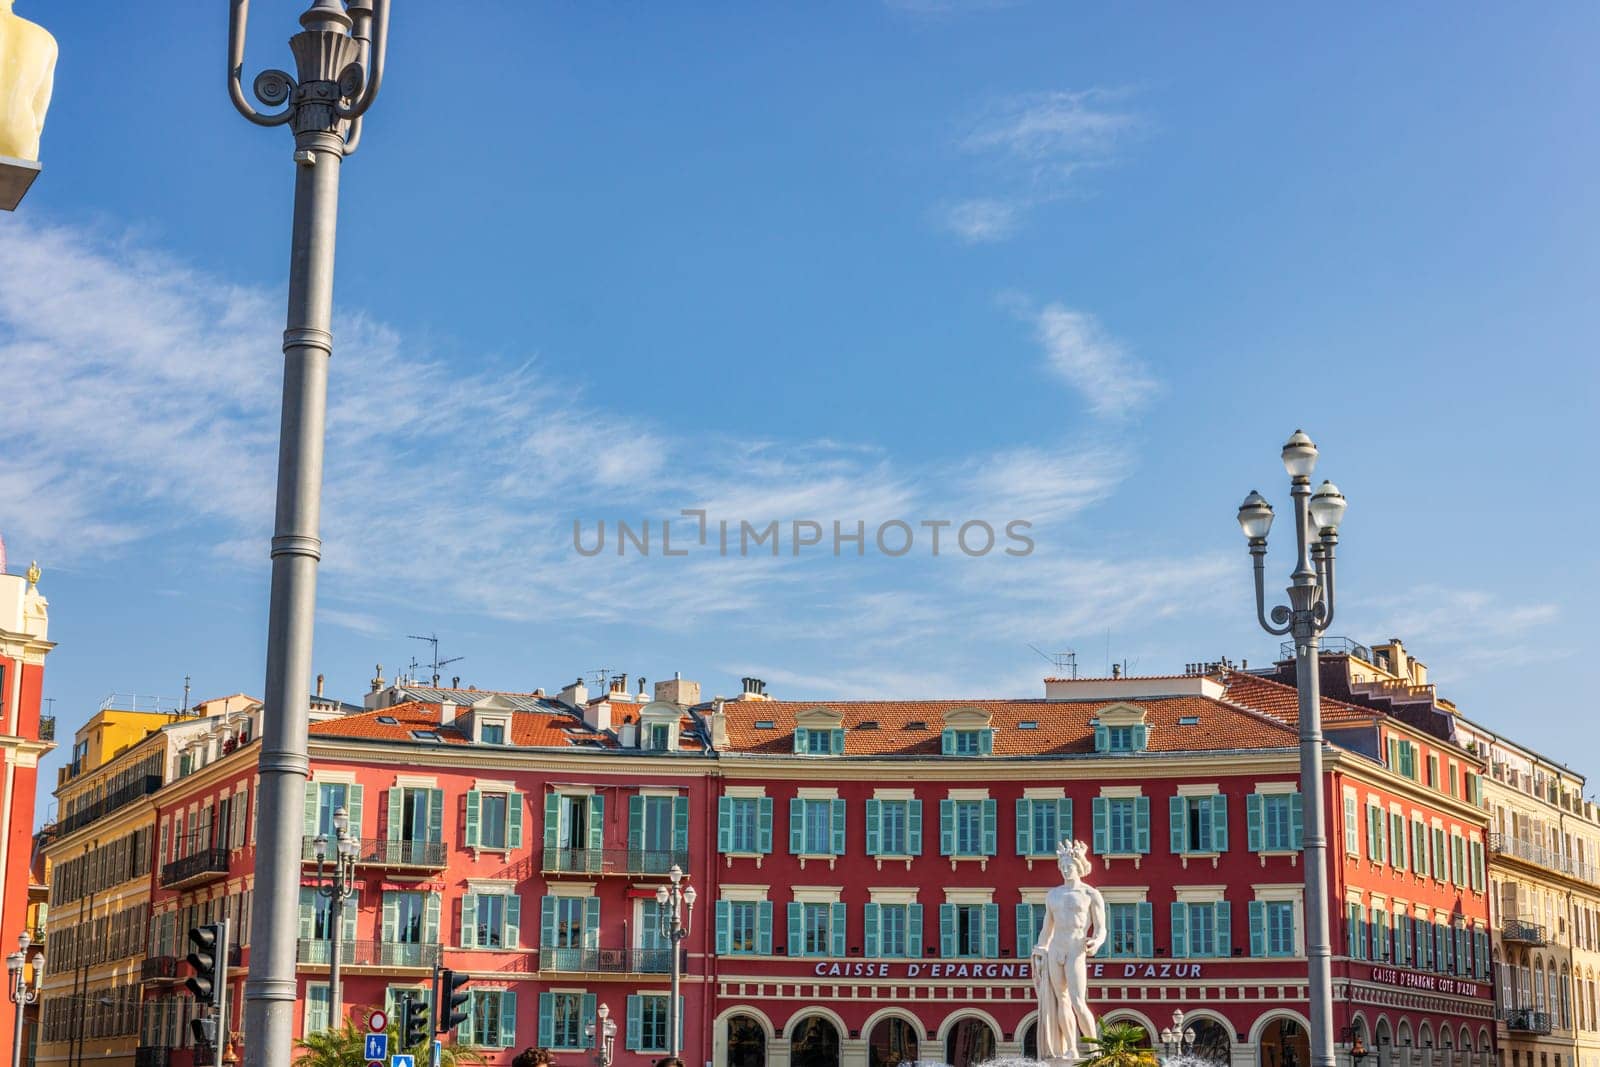 Iconic landmarks of Nice, France by vladispas